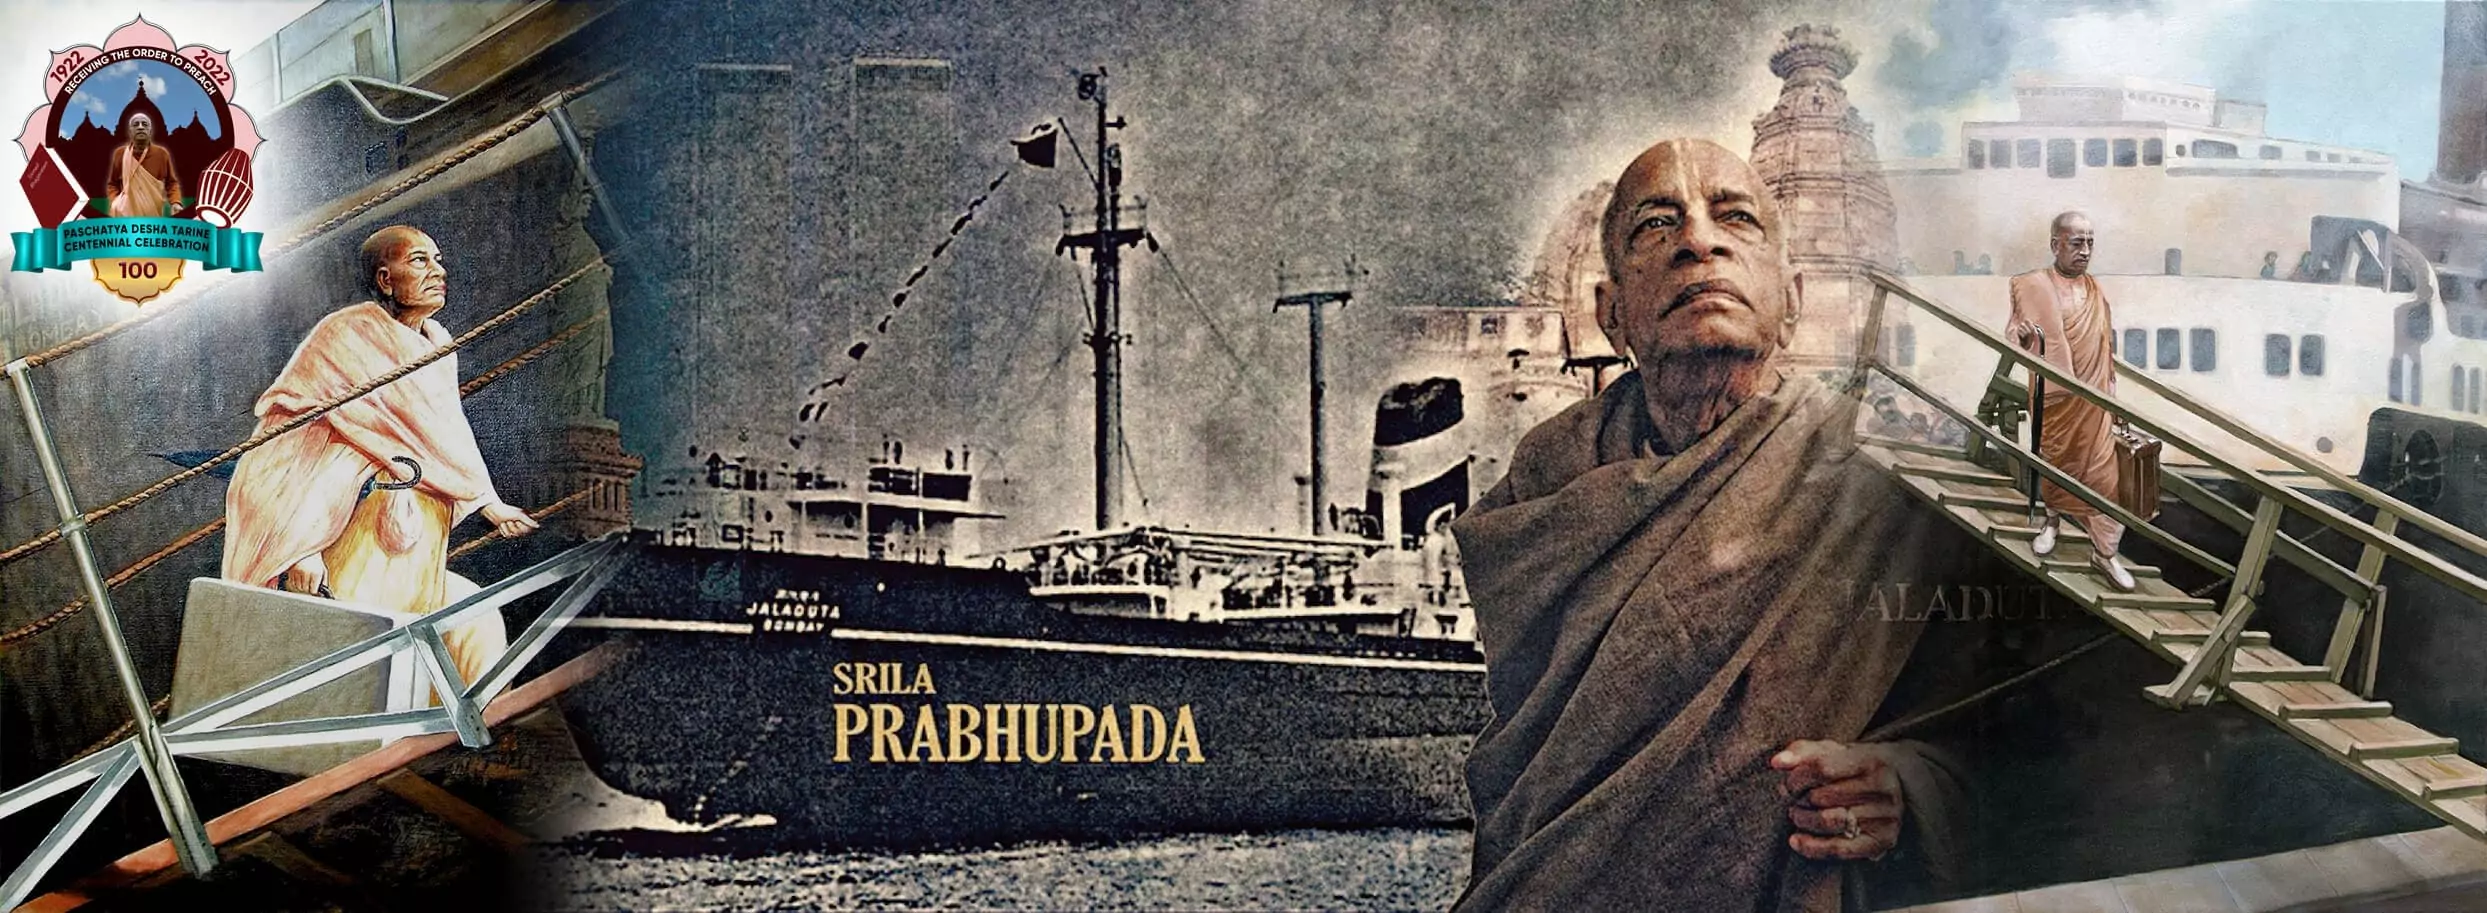 "Bhaktivedanta Swami Maharaja فعلها بالفعل!" من الكتاب ، Our Srila Prabhupada - A Friend to All ، بقلم غريس مولابراكريتي ديفي داسي